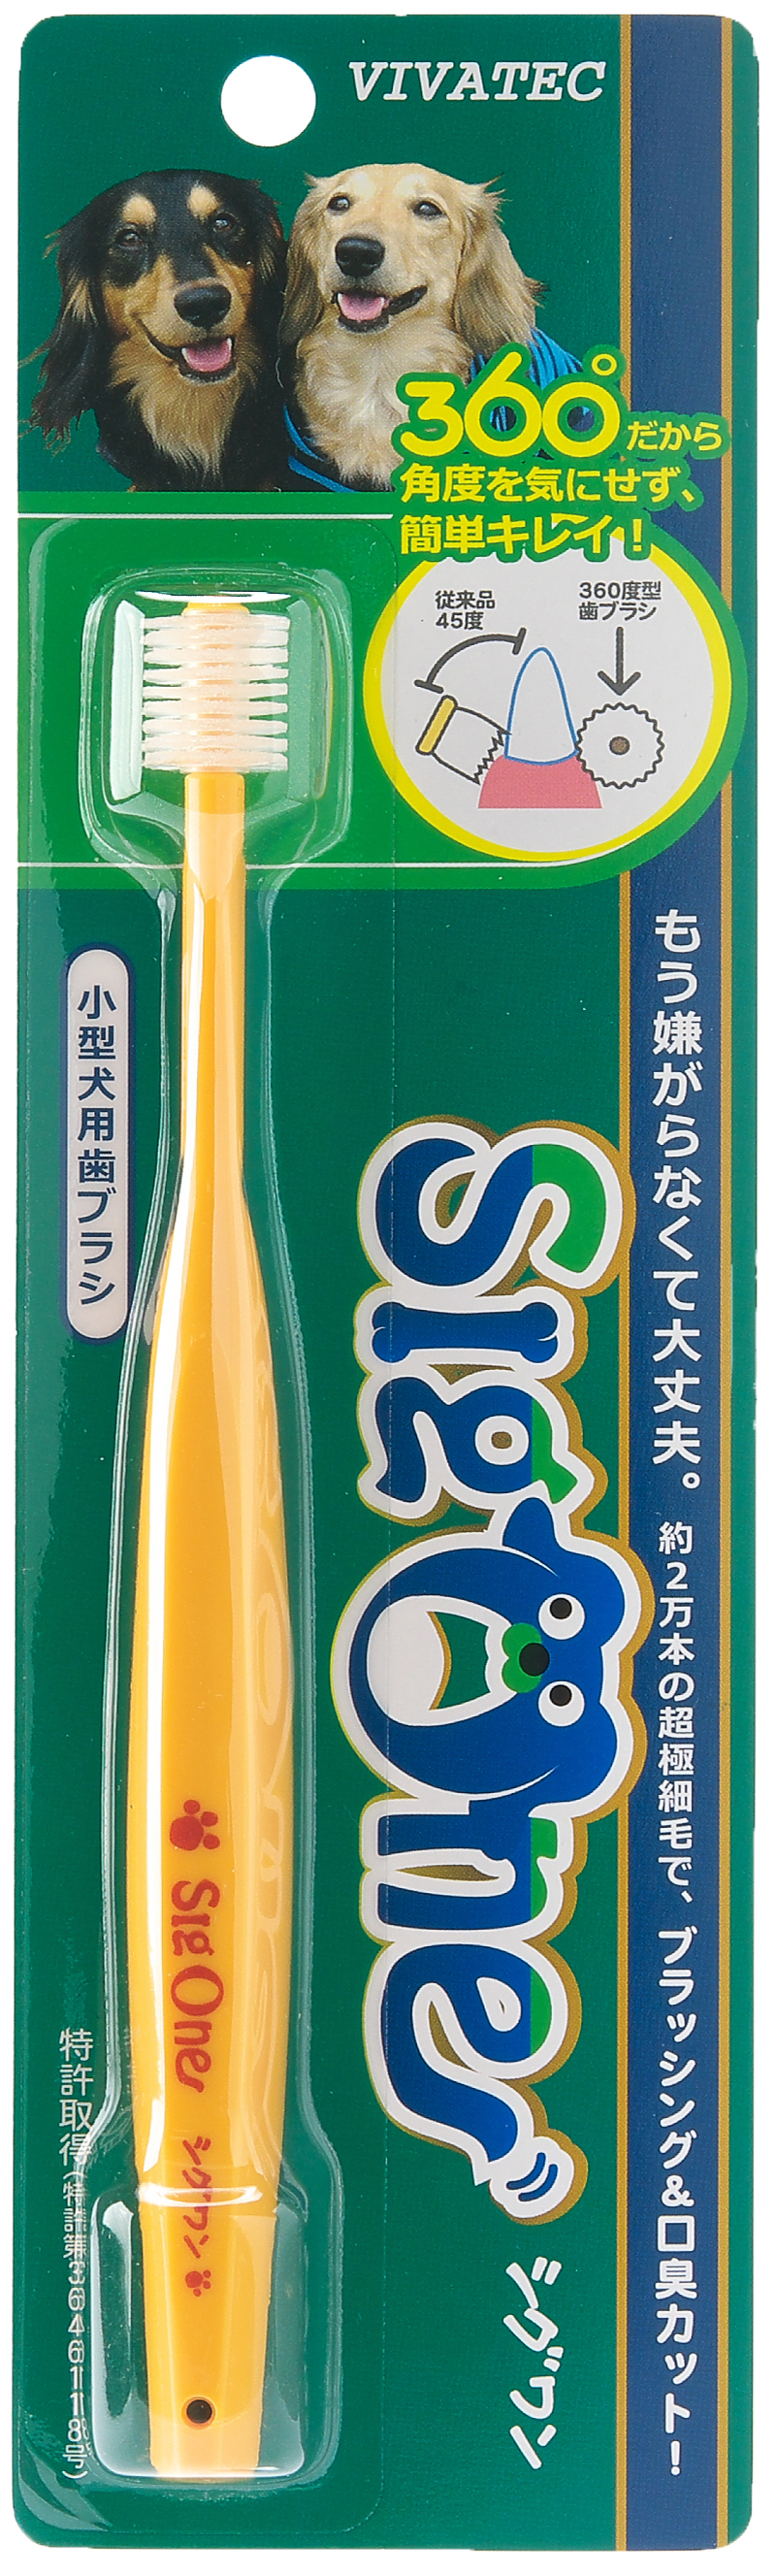 CooRIKU公式オンラインショップ / シグワン小型犬用歯ブラシ